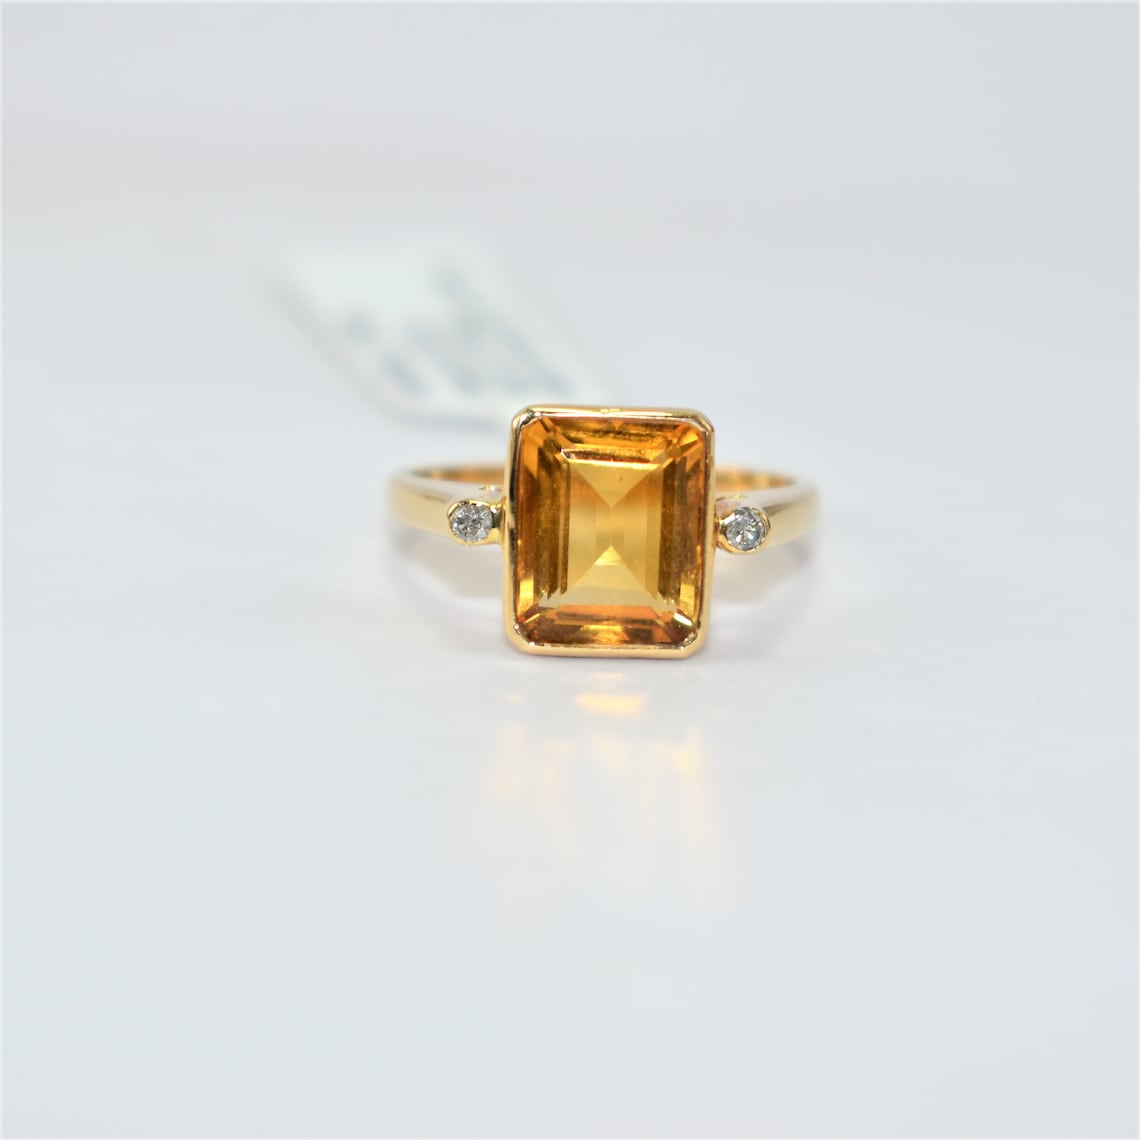 Gorgeous Yellow Topaz Stone Handmade Rectangular Ring | Etsy